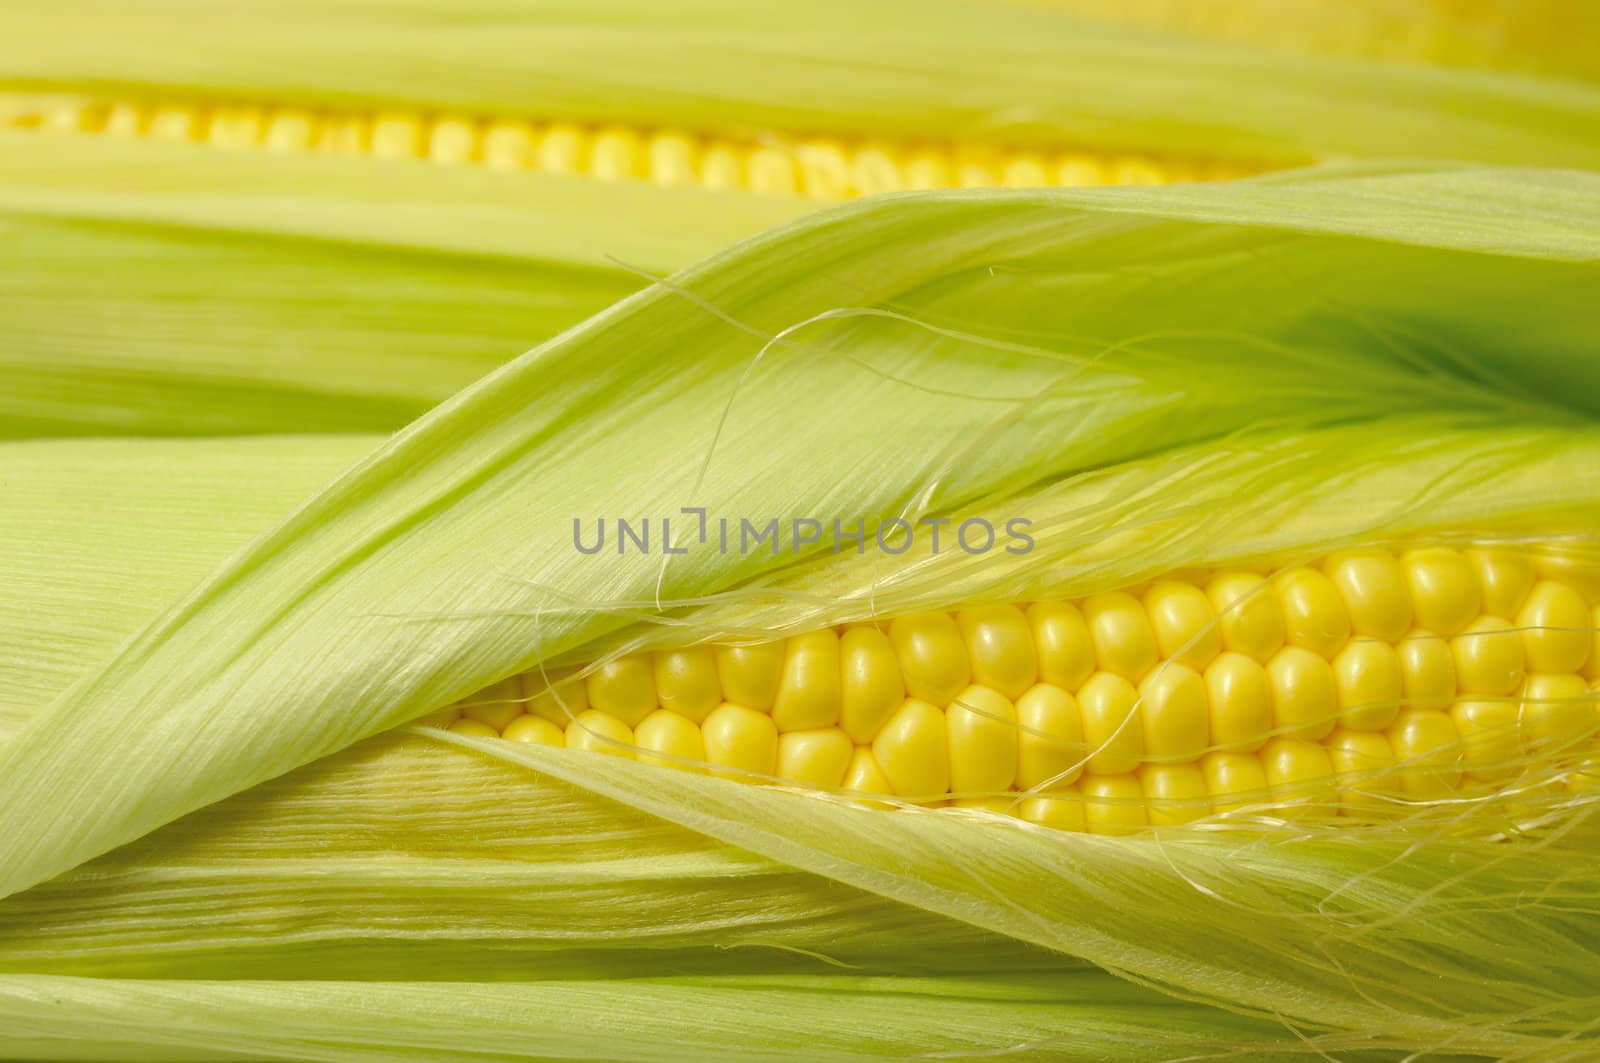  soft light fresh raw corn background, focus on the front yellow corns